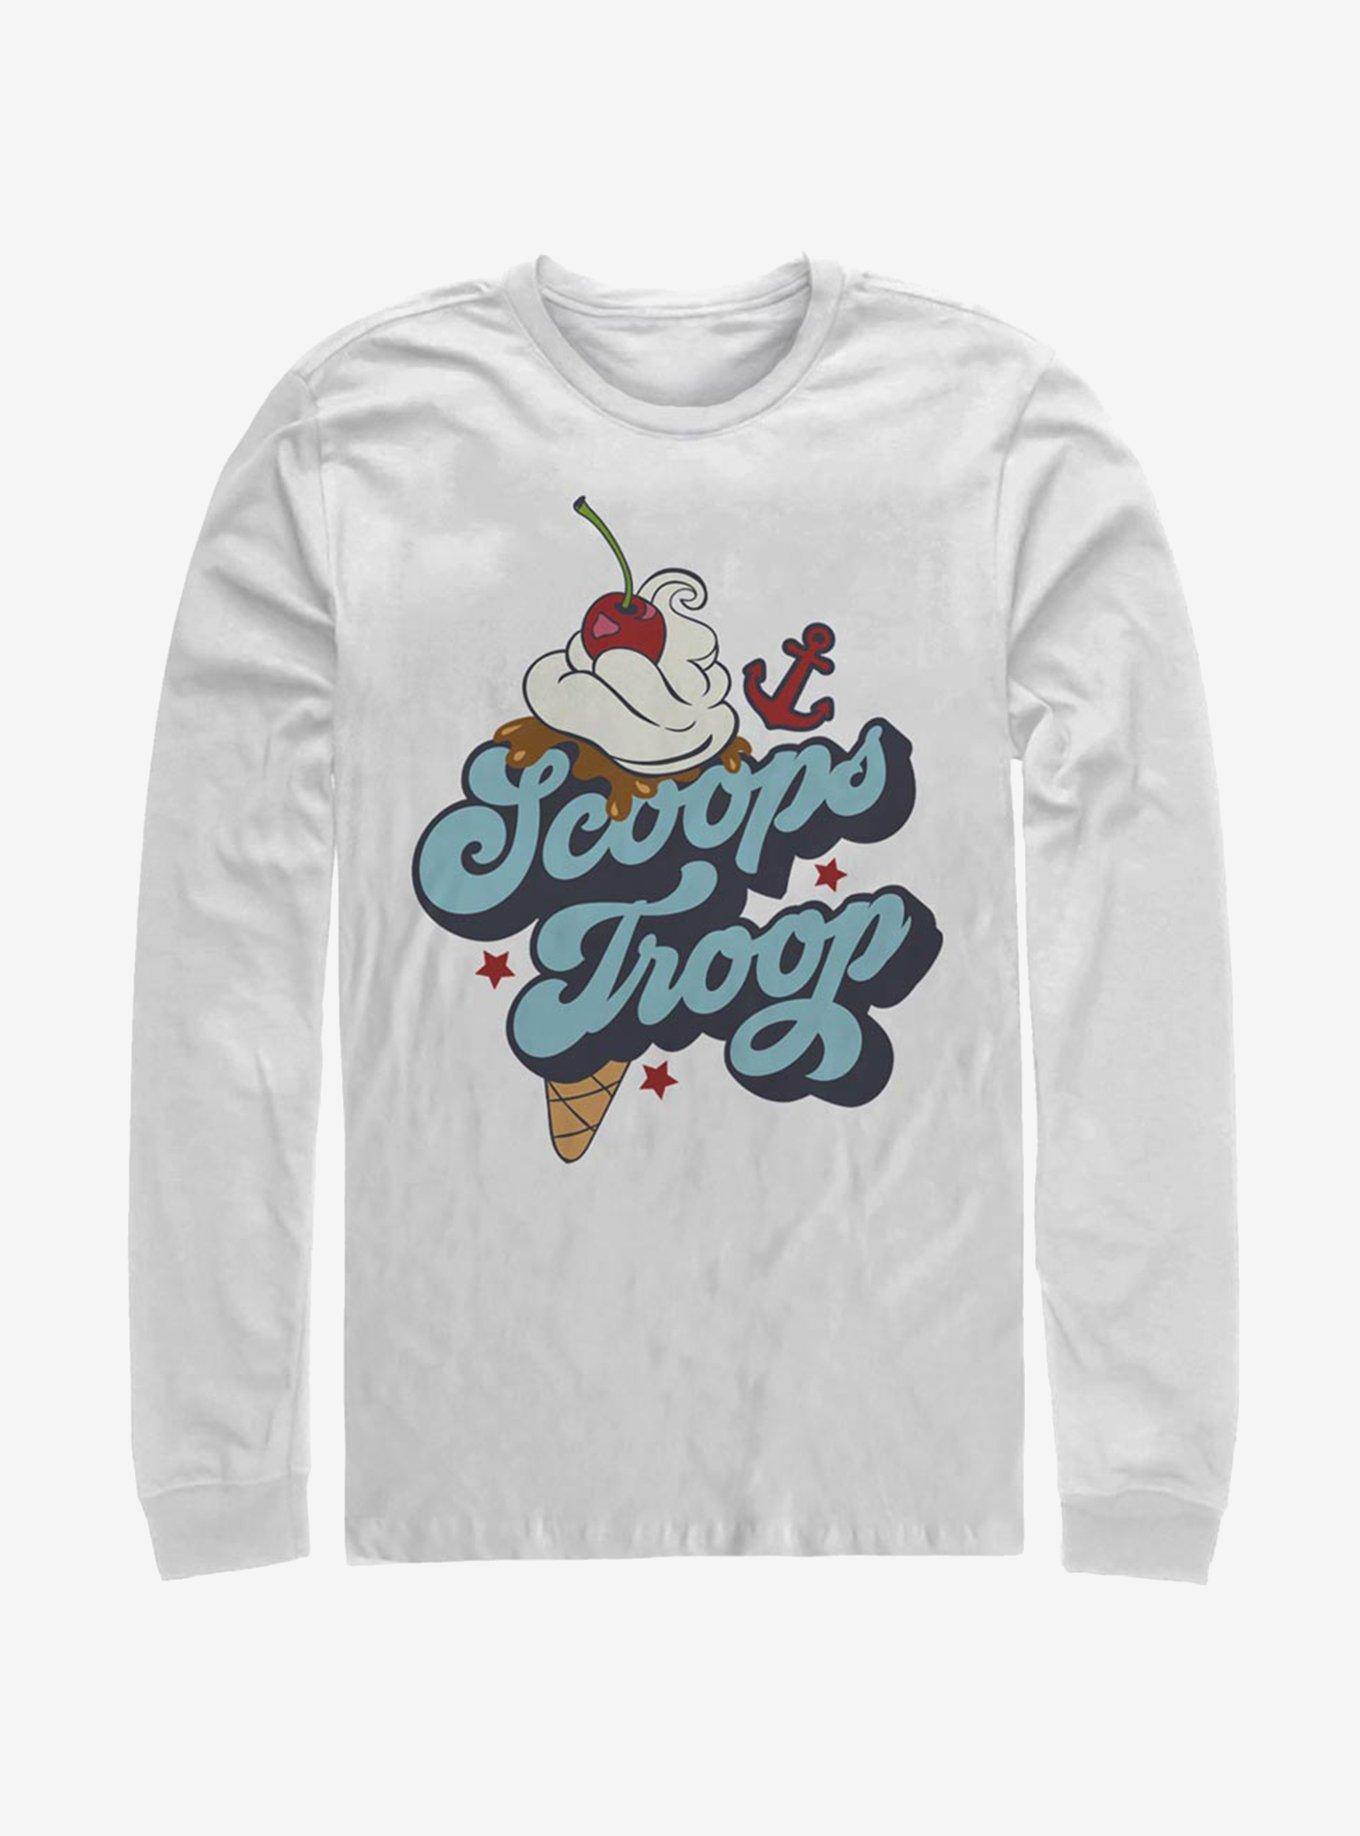 Stranger Things Scoops Troop Ice Cream Long-Sleeve T-Shirt, WHITE, hi-res